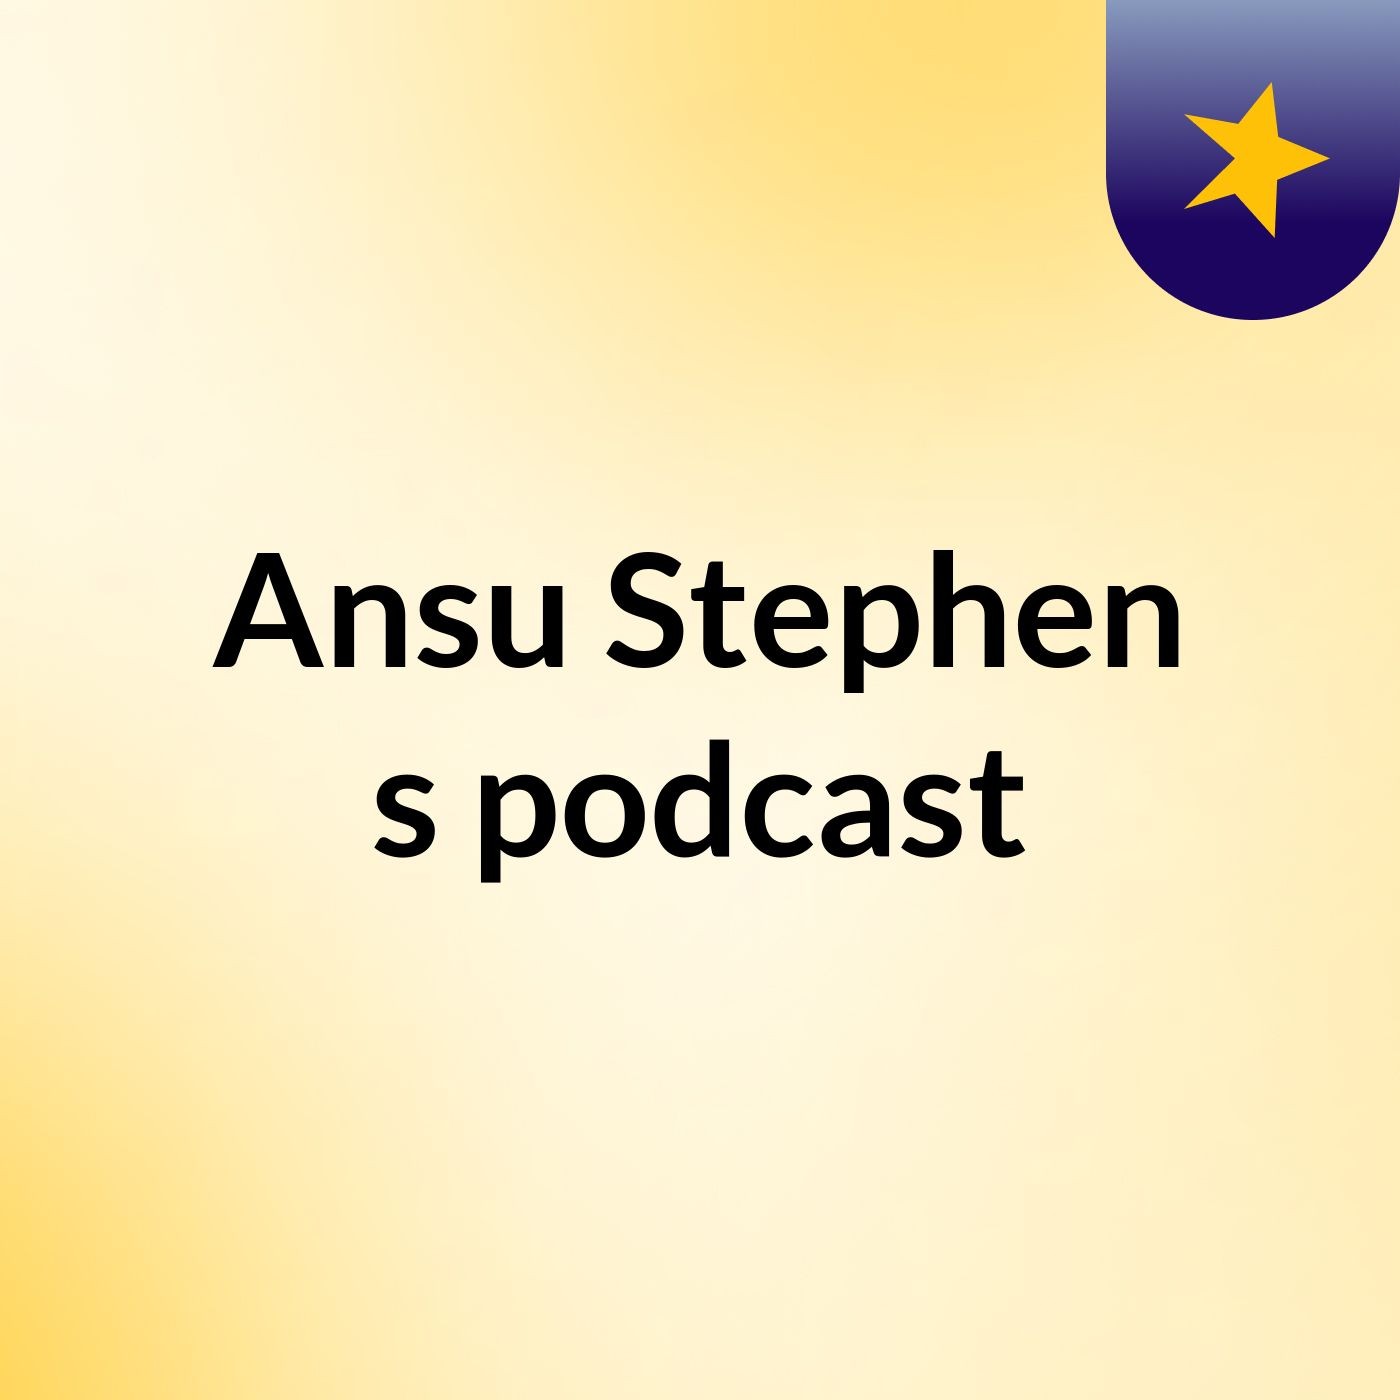 Ansu Stephen's podcast